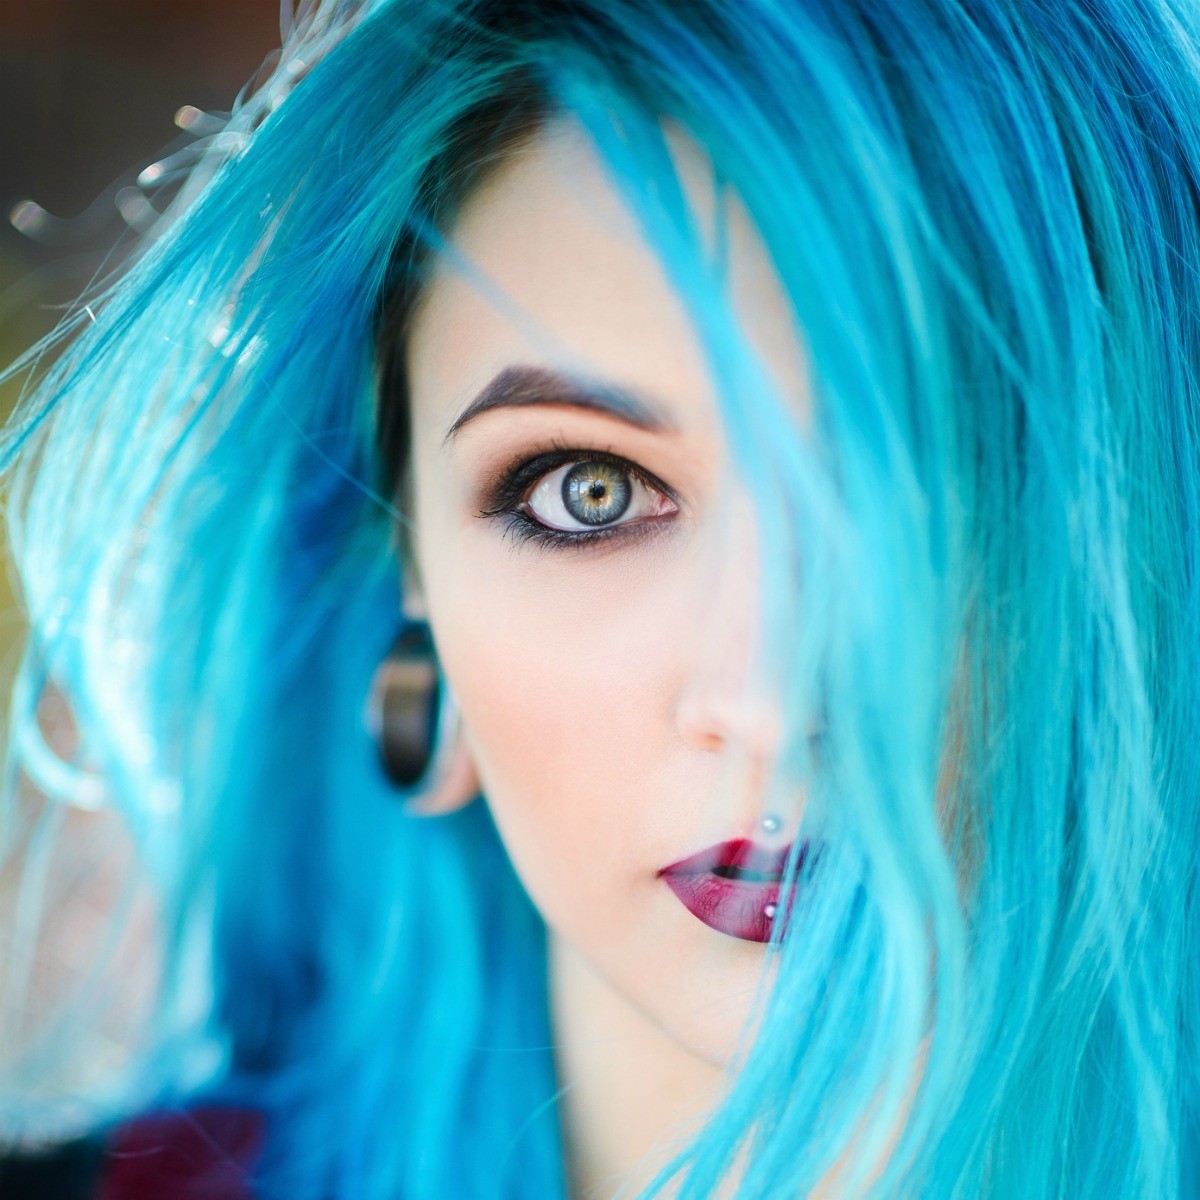 Adding Blue Hair Dye to Previously Dyed Hair? | ThriftyFun